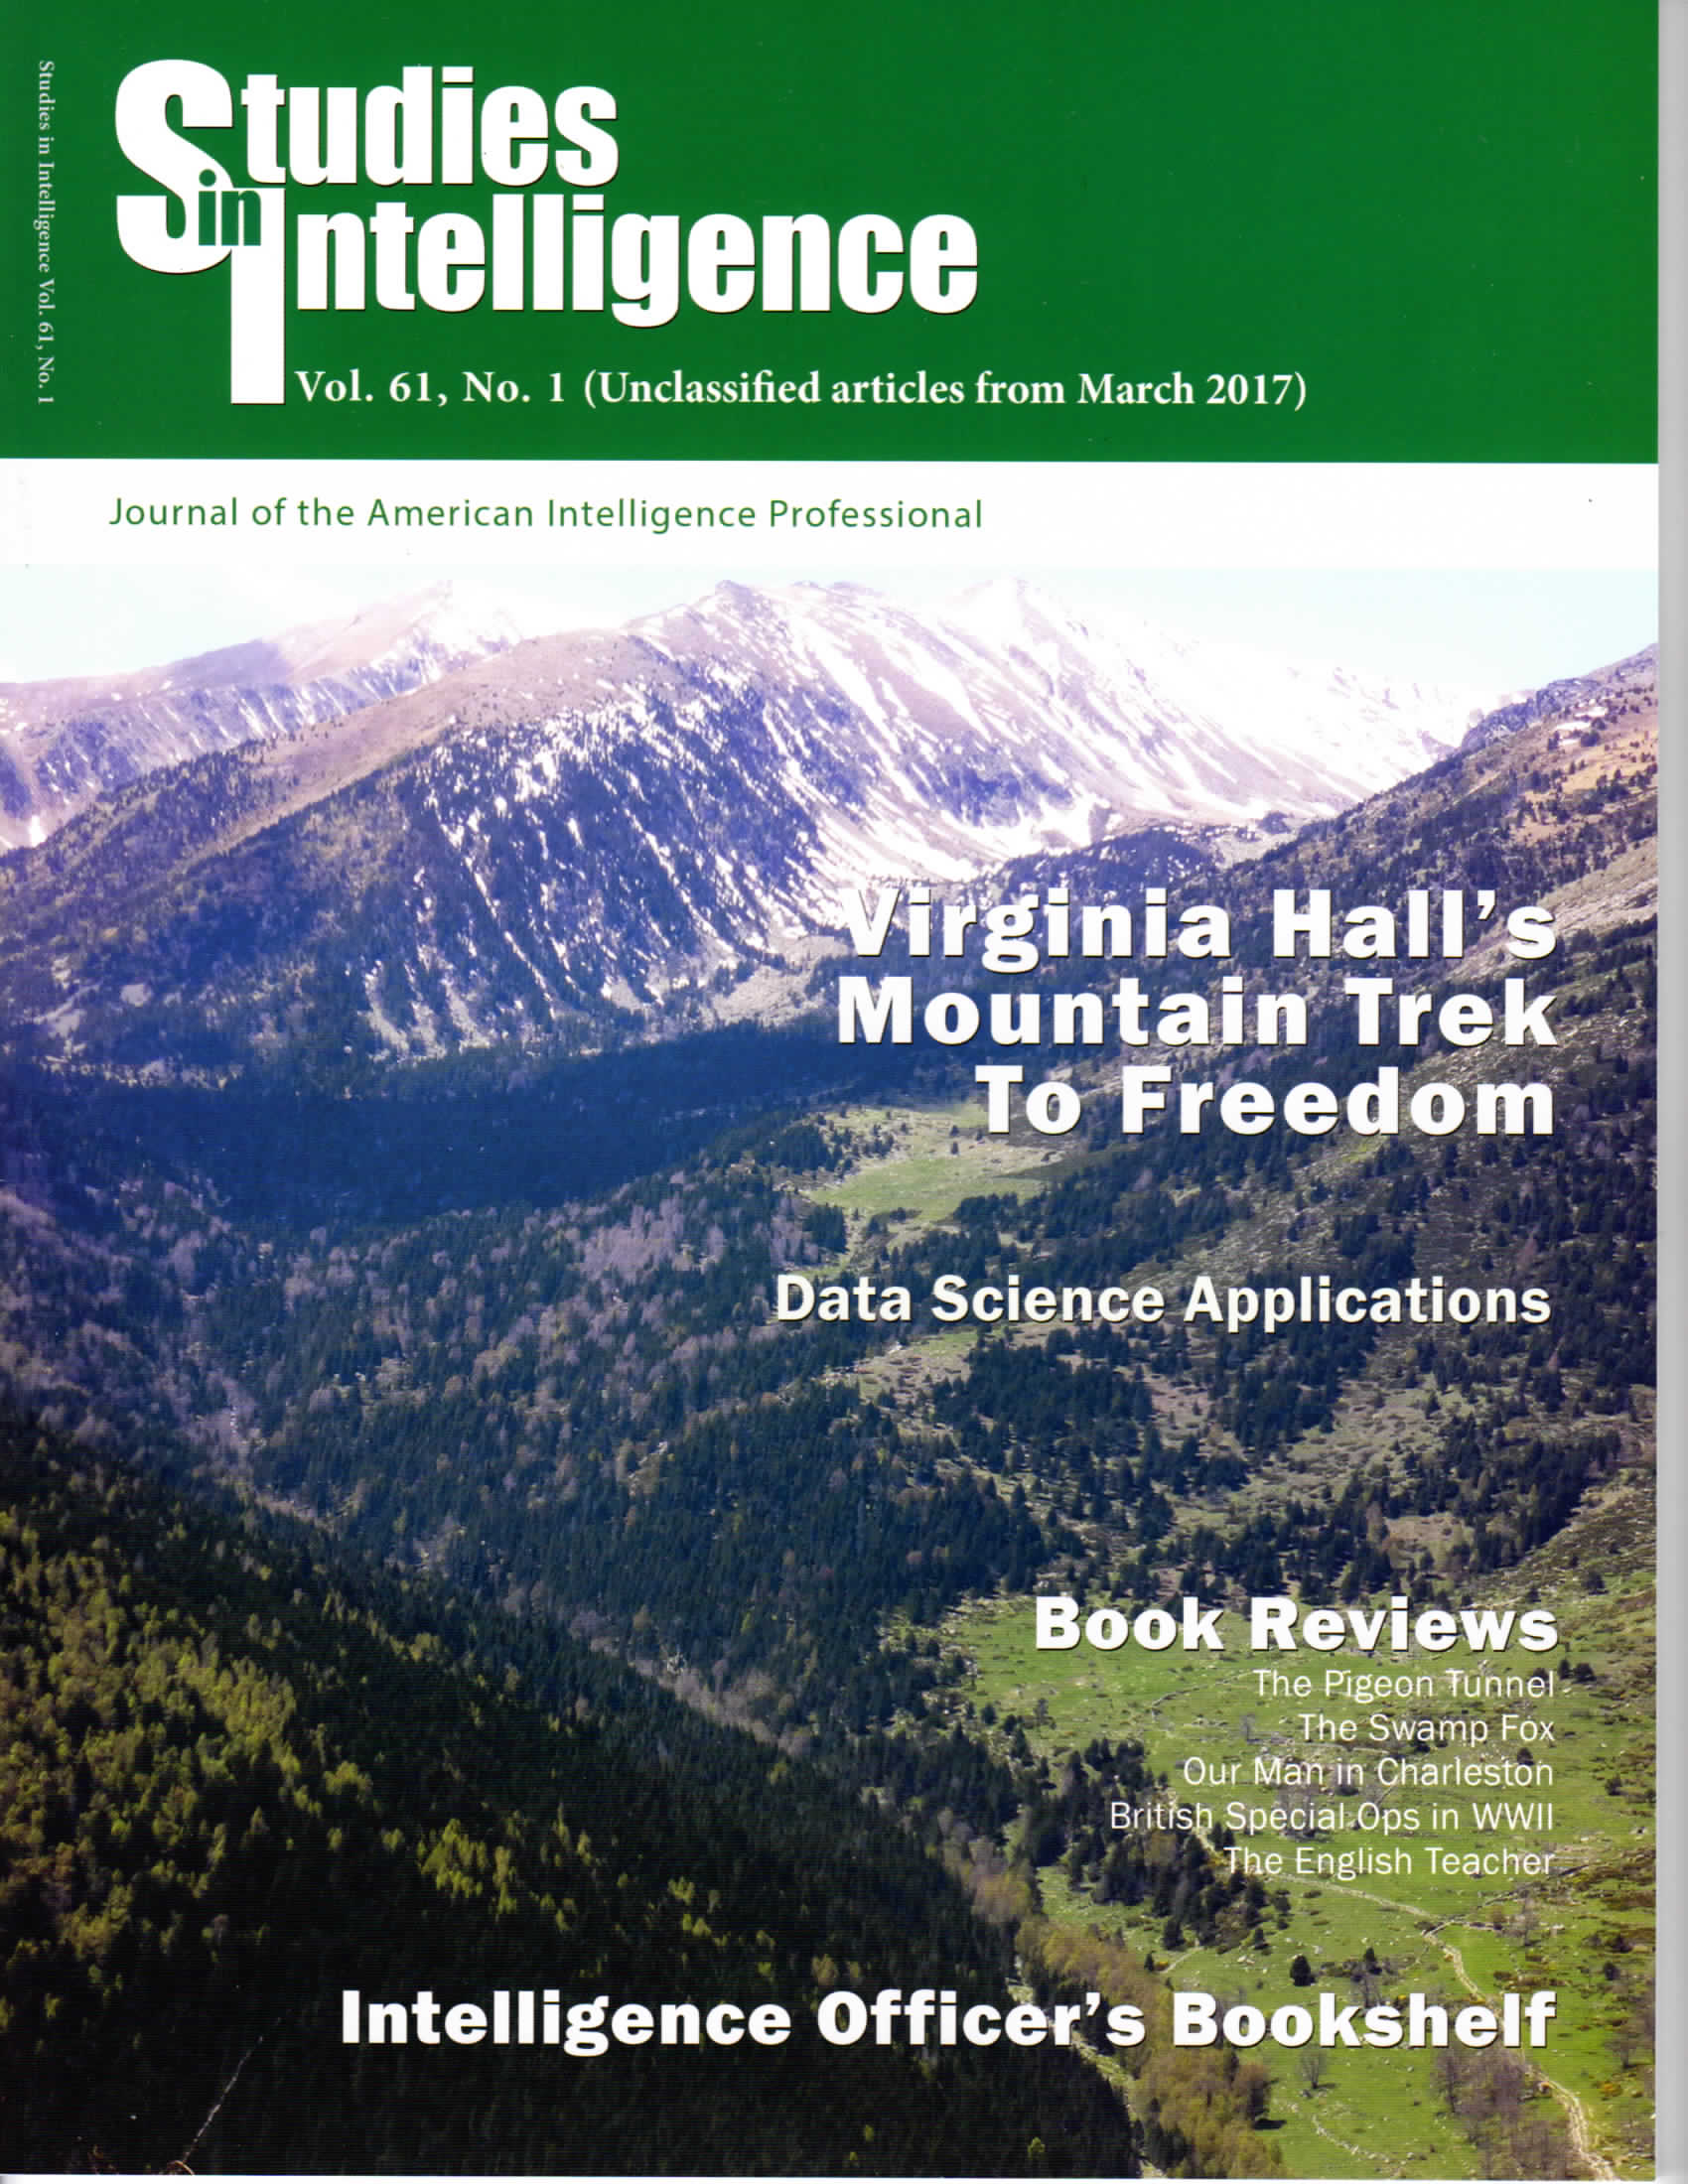 Studies in Intelligence magazine Cover